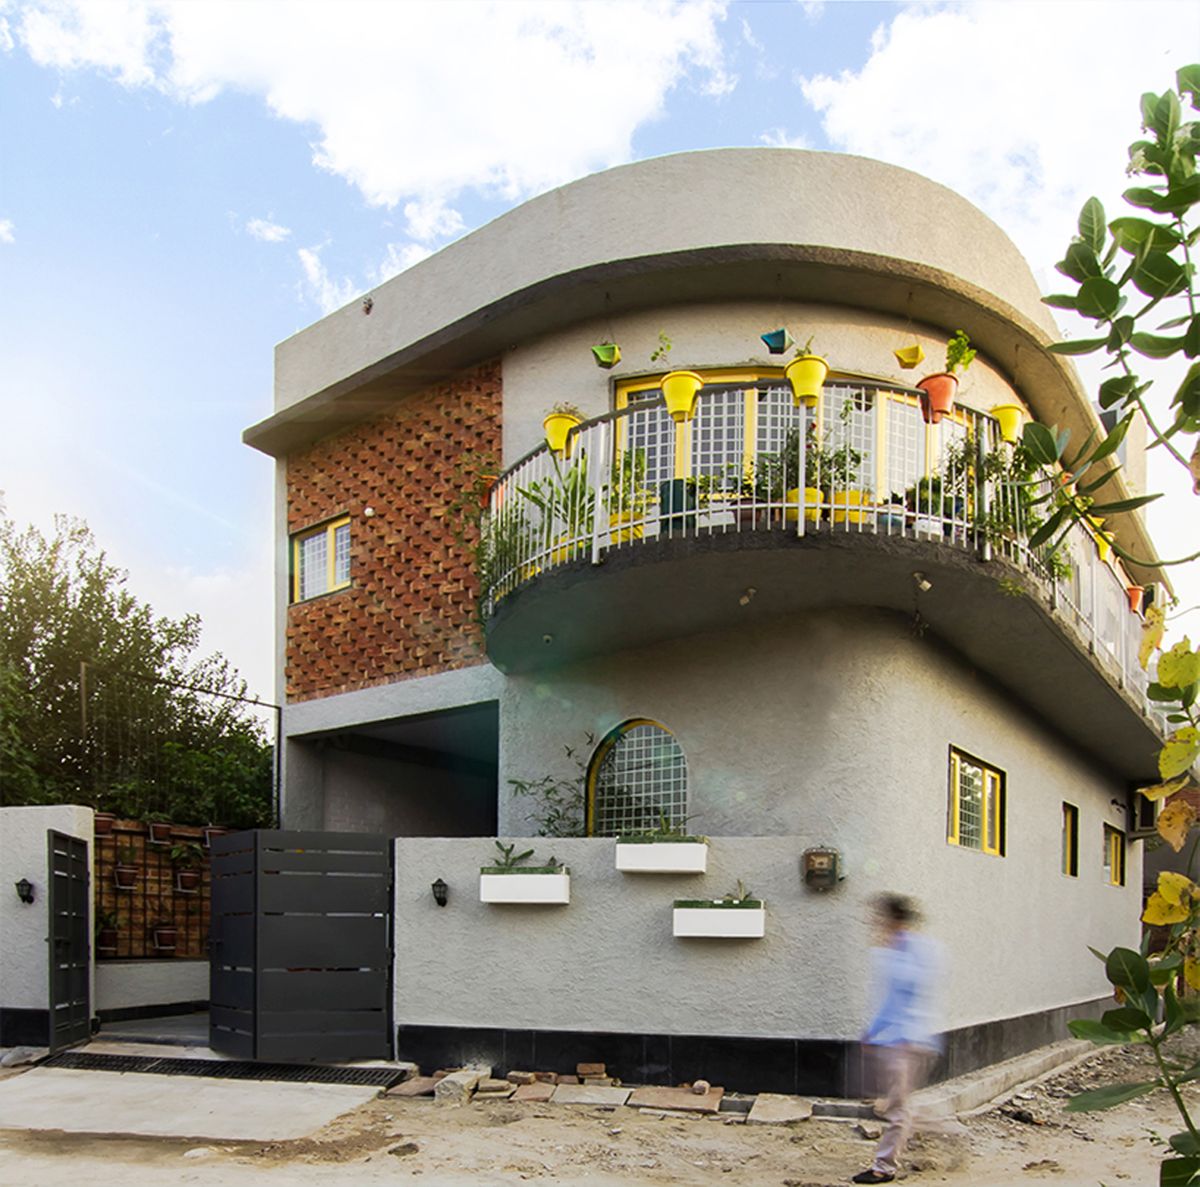 Sangwan House, at Rohini, Delhi, India, by Habitat Design Collective